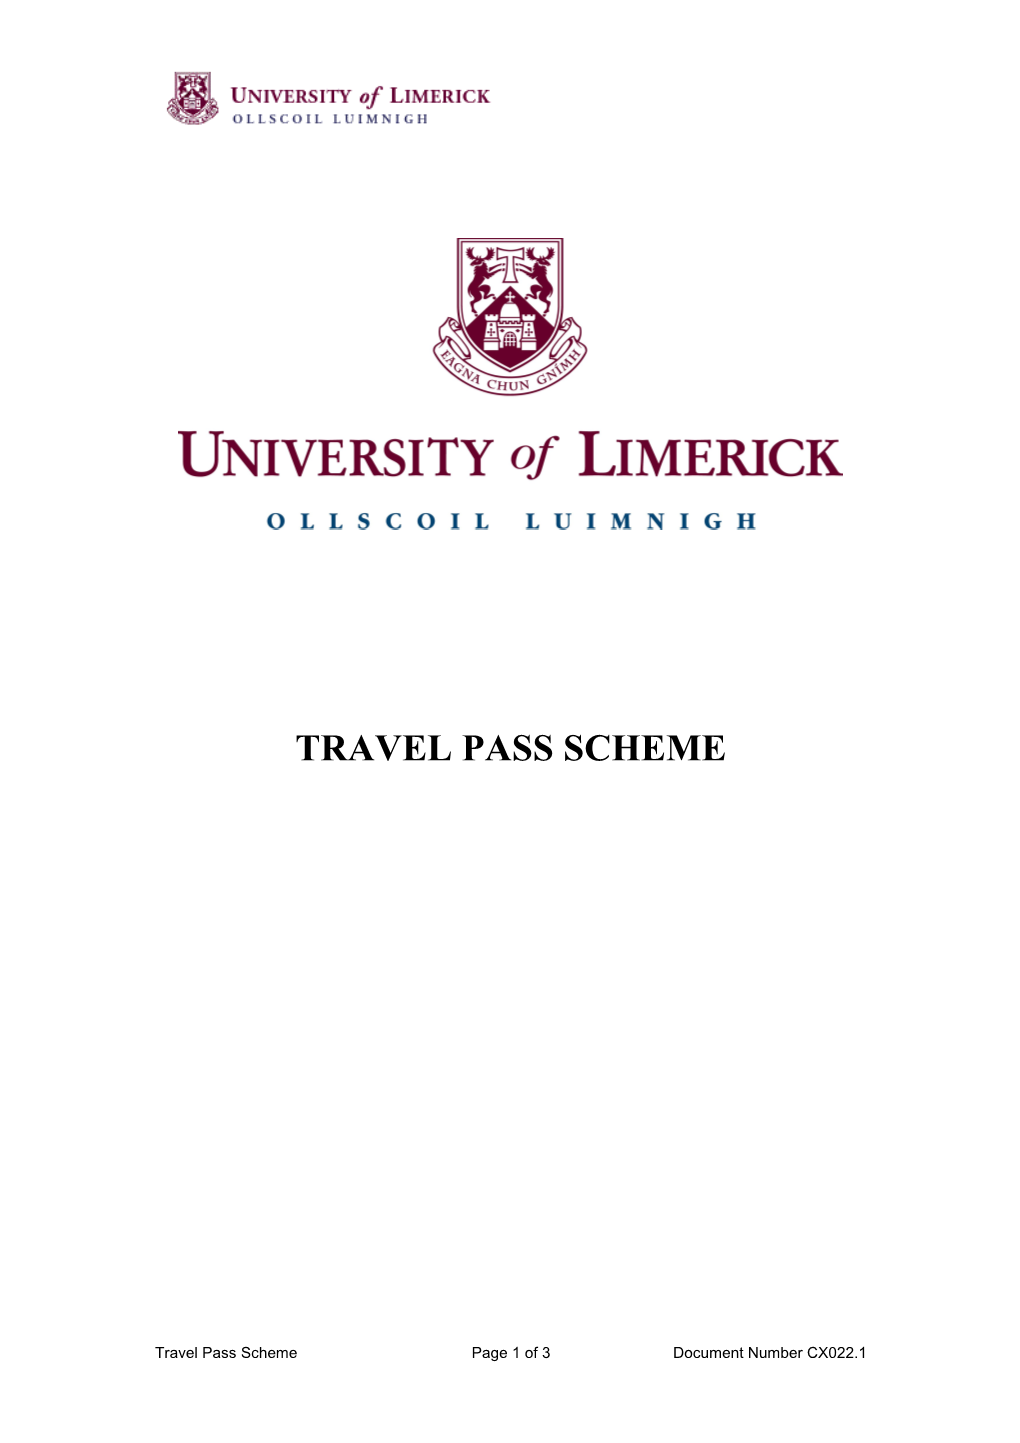 University of Limerick Travel Pass Scheme